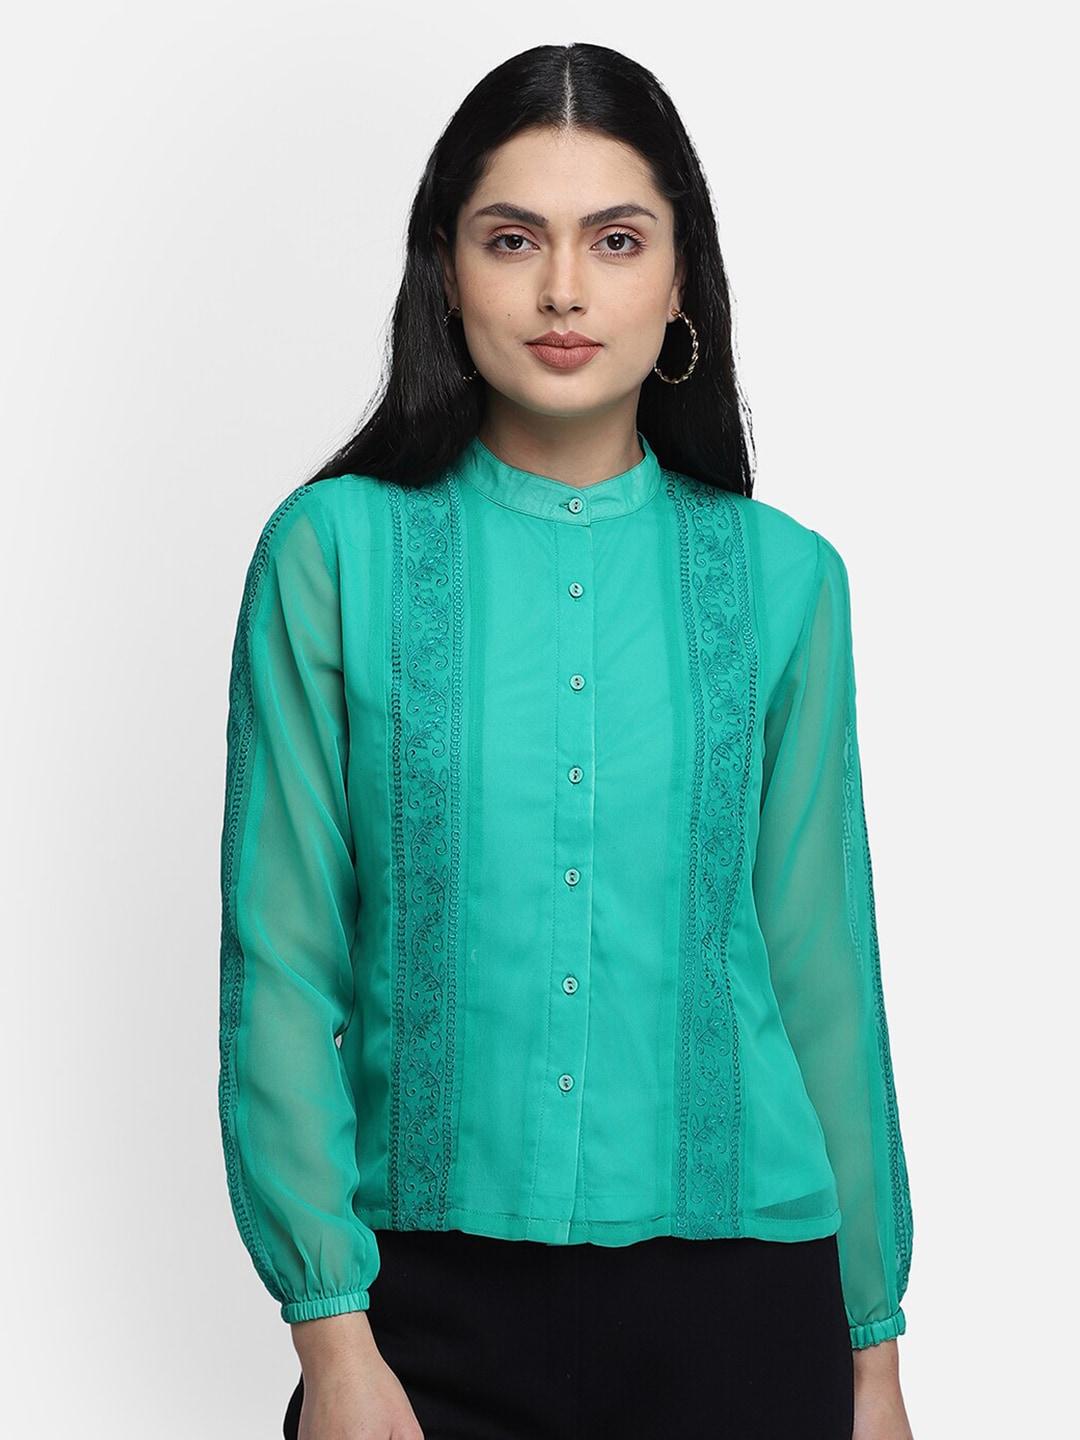 Yaadleen Sea Green Embroidered Mandarin Collar Georgette Shirt Style Top